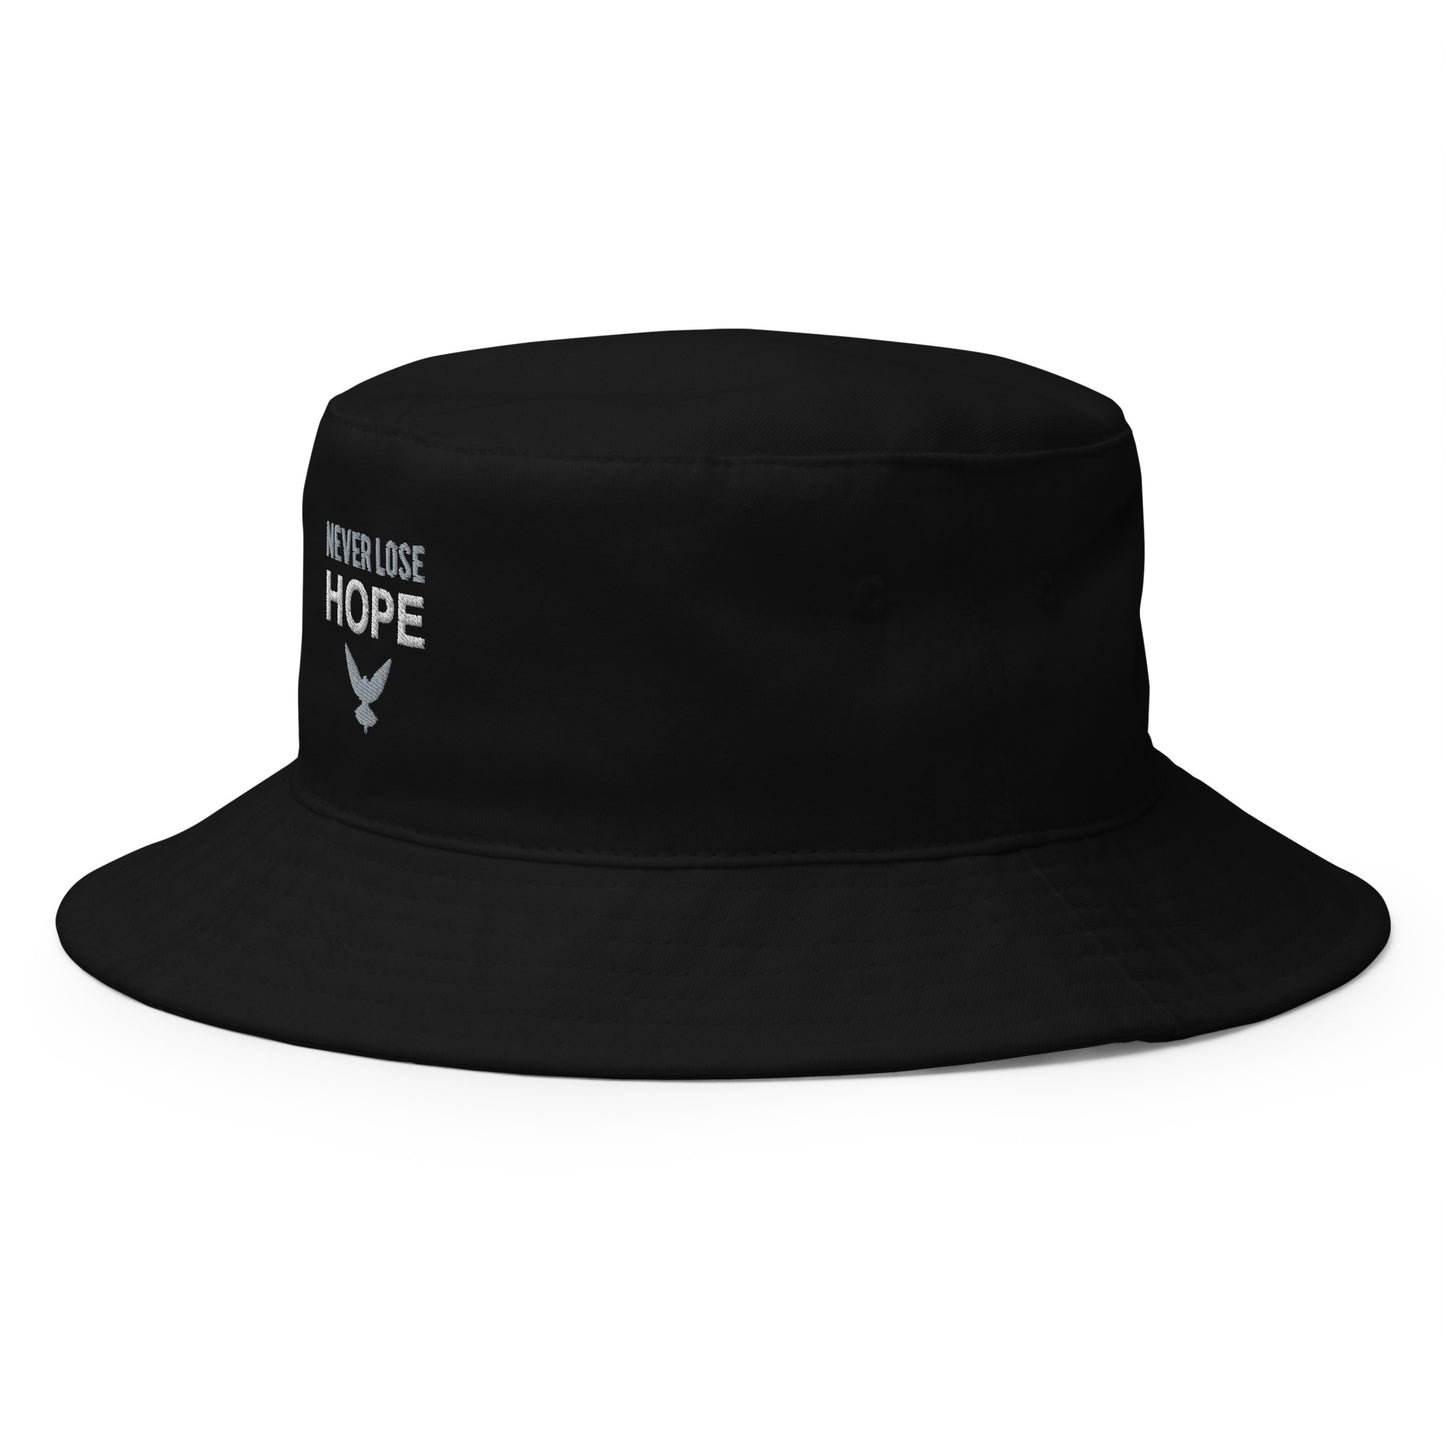 NEVER LOSE HOPE Bucket Hat (Black)